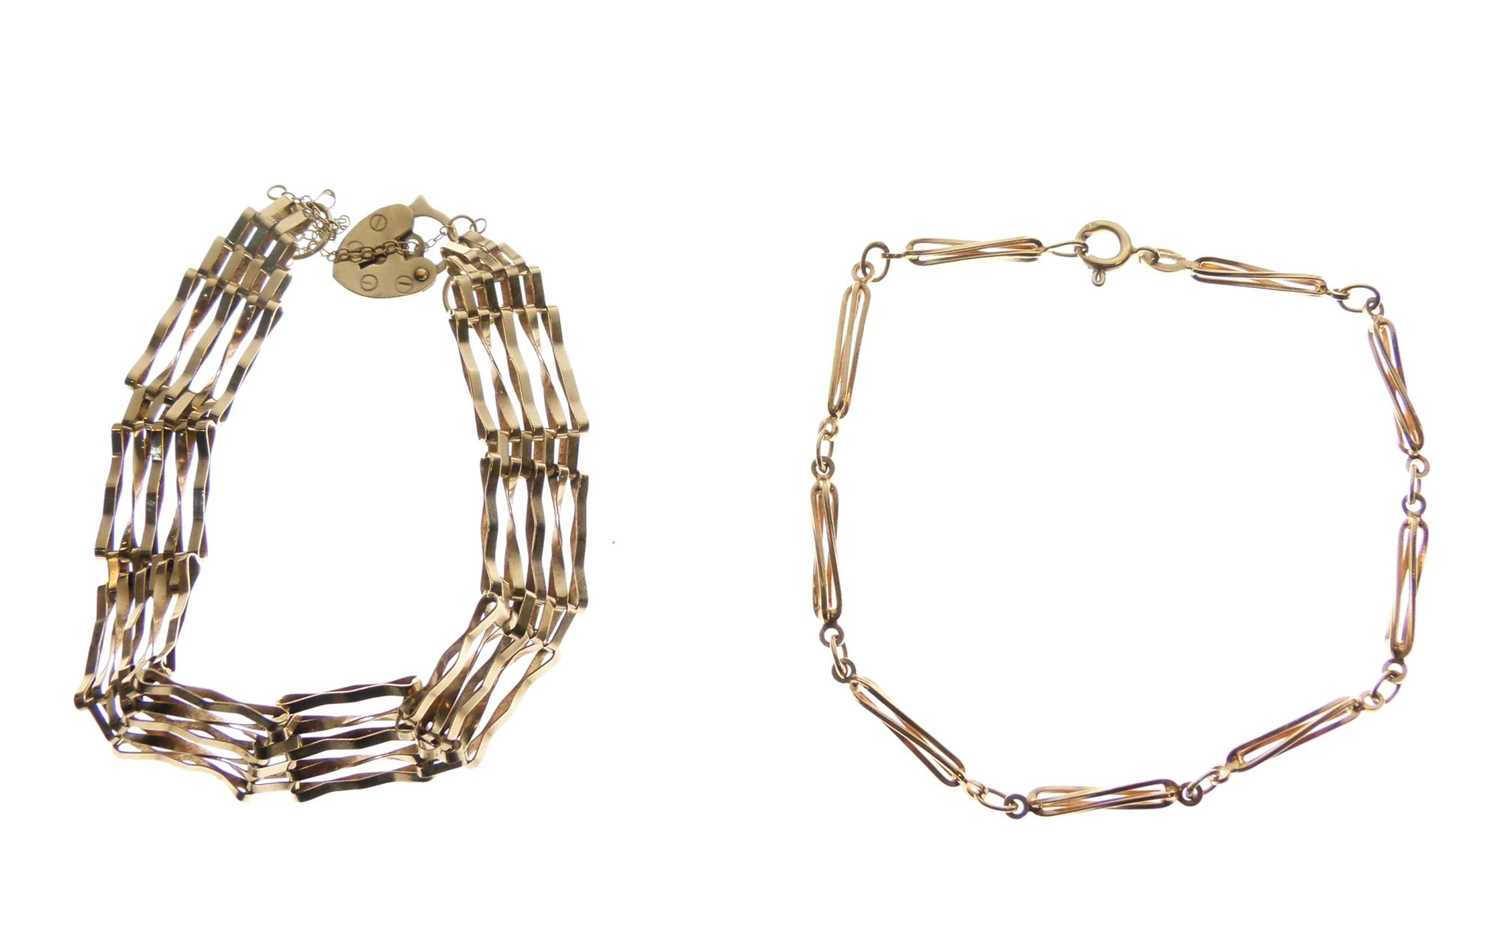 Lot 81 - Yellow metal (9ct) gate link bracelet and 9ct Figaro link bracelet (2)